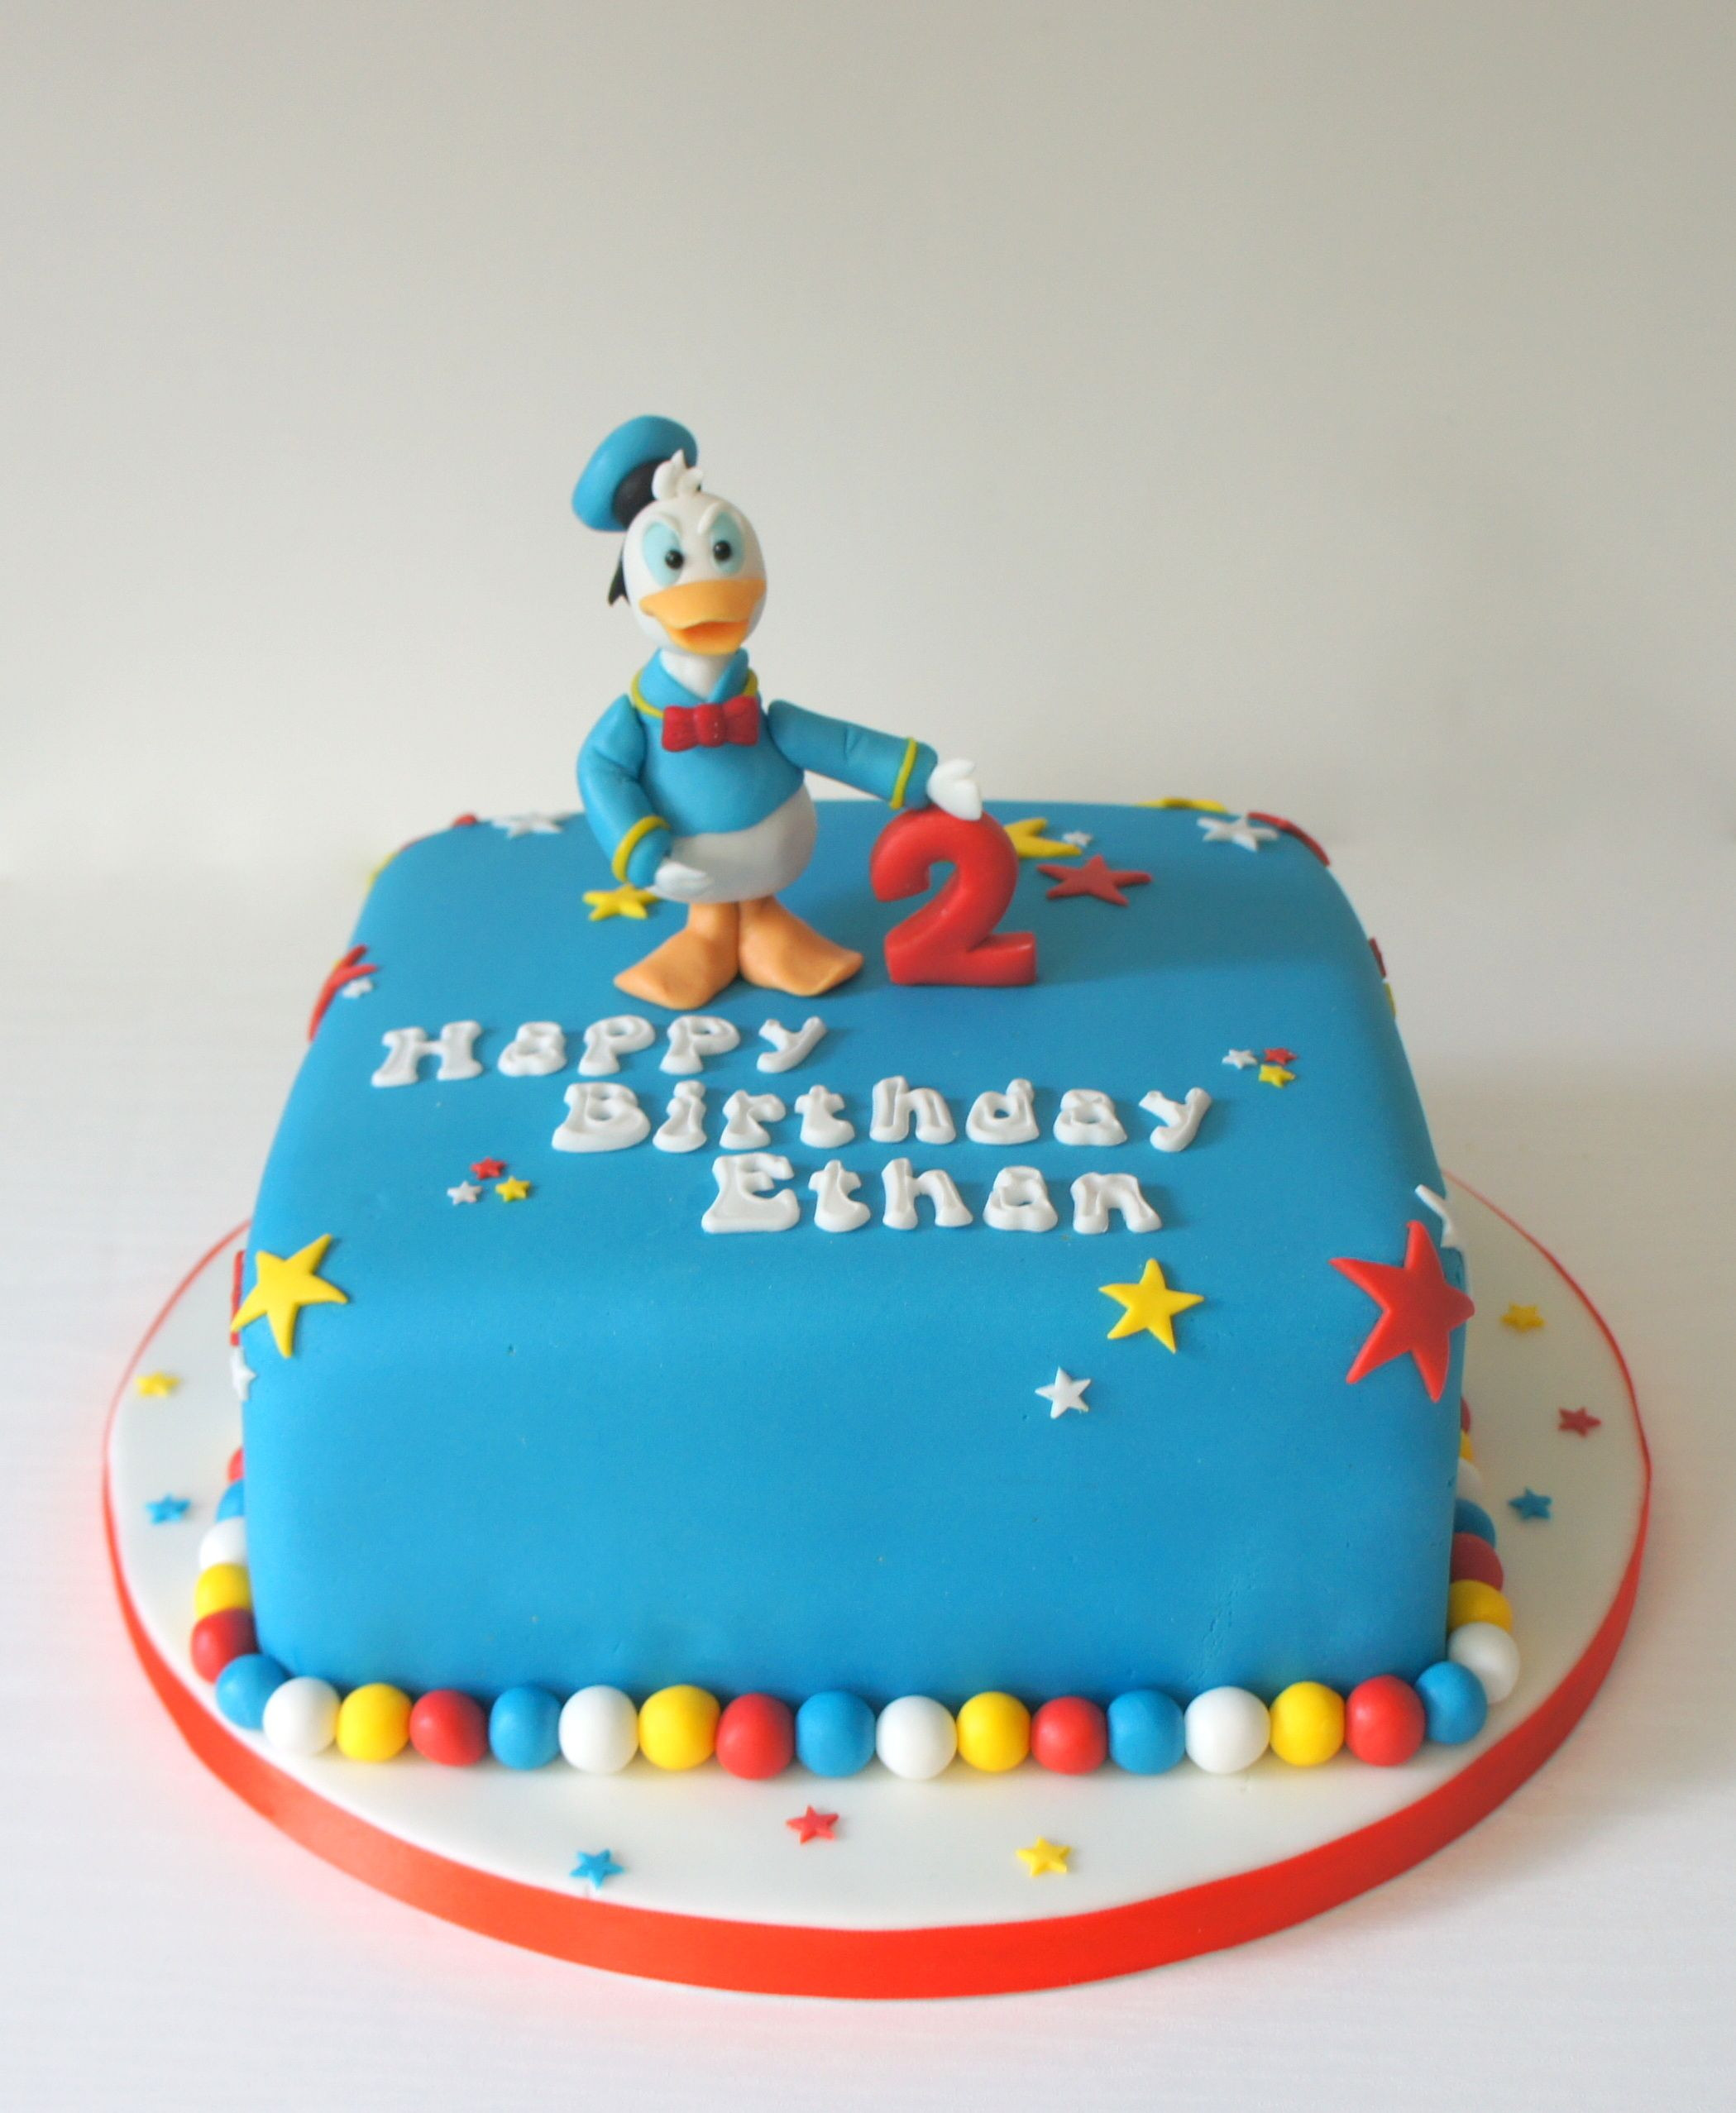 Donald Duck Birthday Cake
 donald duck cake Donald duck celebration cake from